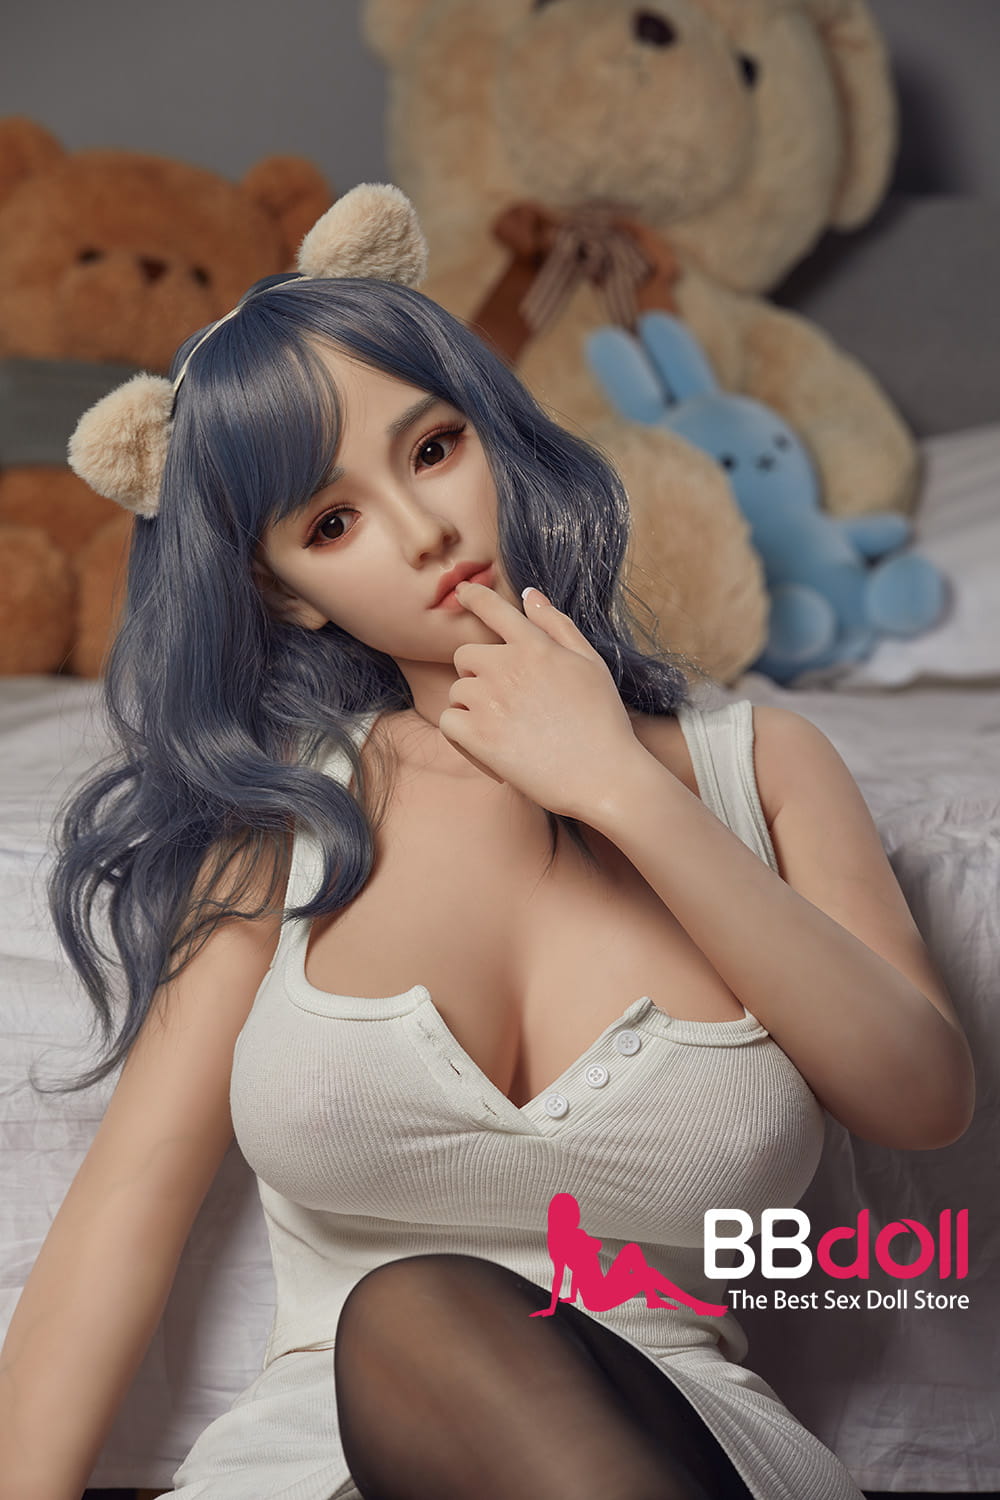 Anime Silicone Sex Dolls